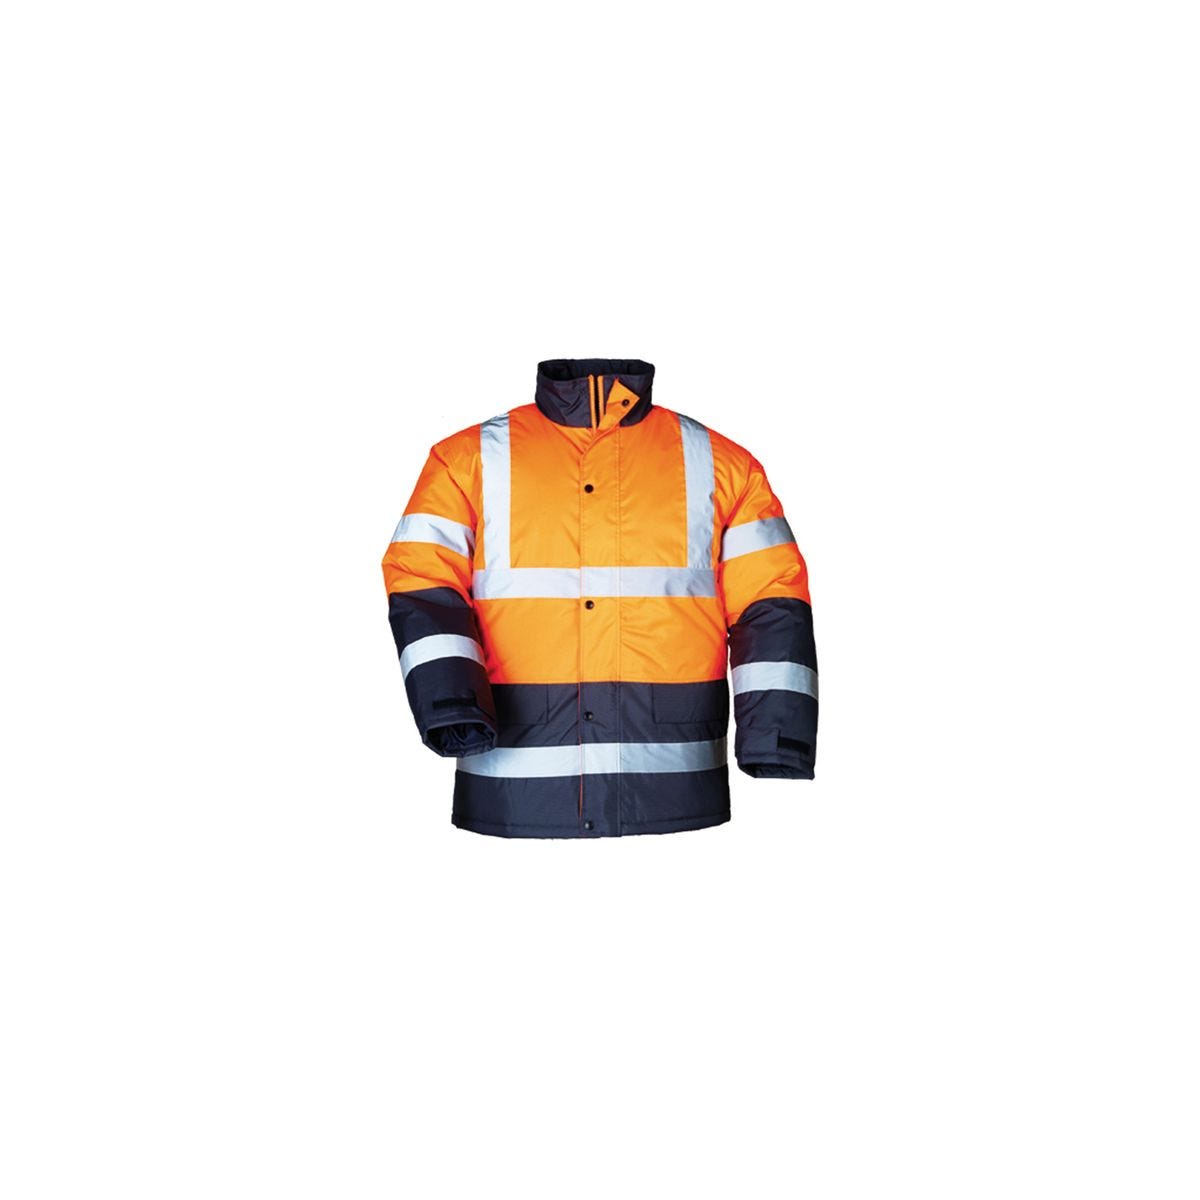 ROADWAY Parka matelassée, orange HV/marine, Polyester Oxford 300D - COVERGUARD - Taille L 0